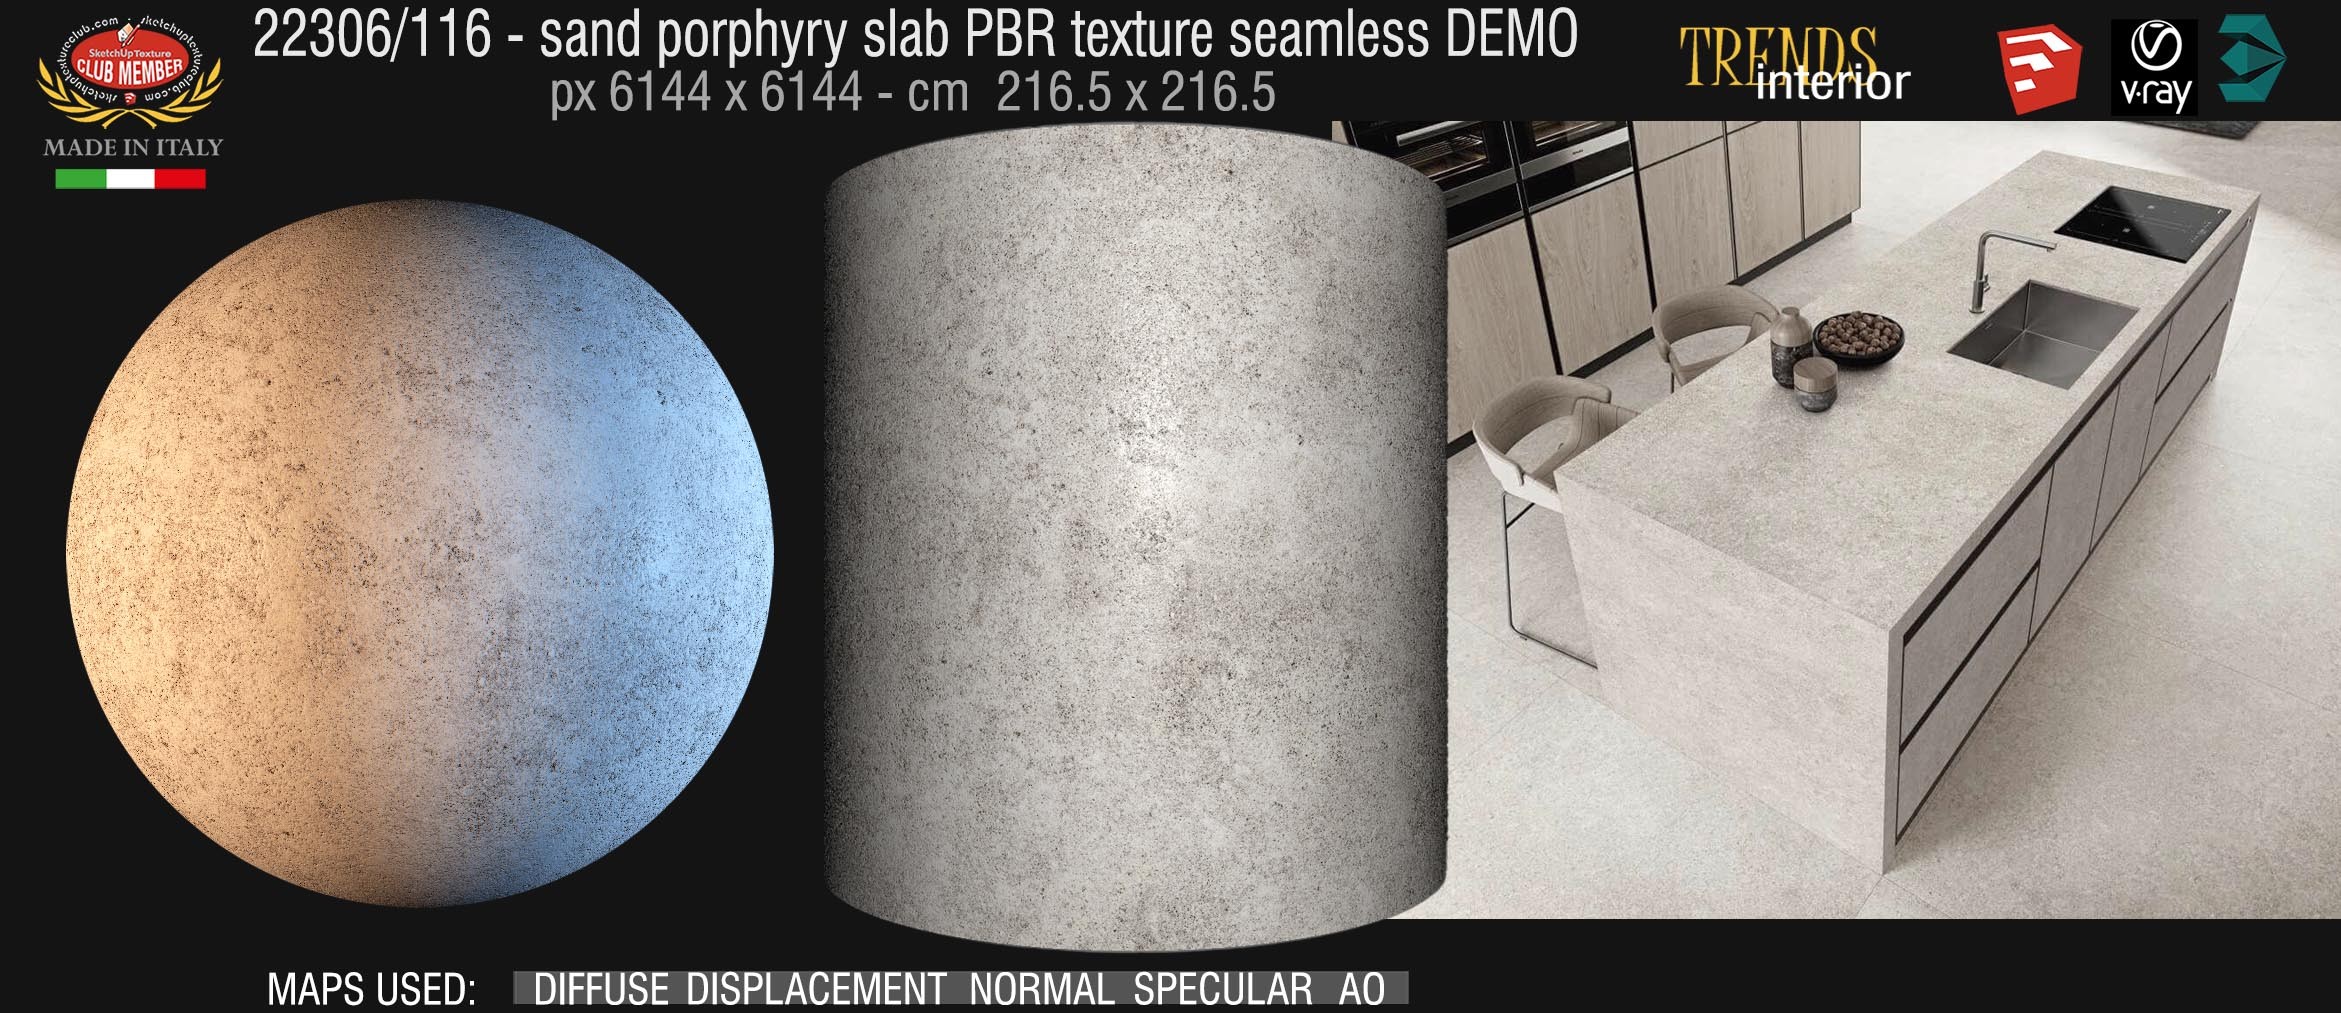 22306_116 sand porphyry slab PBR texture seamless DEMO